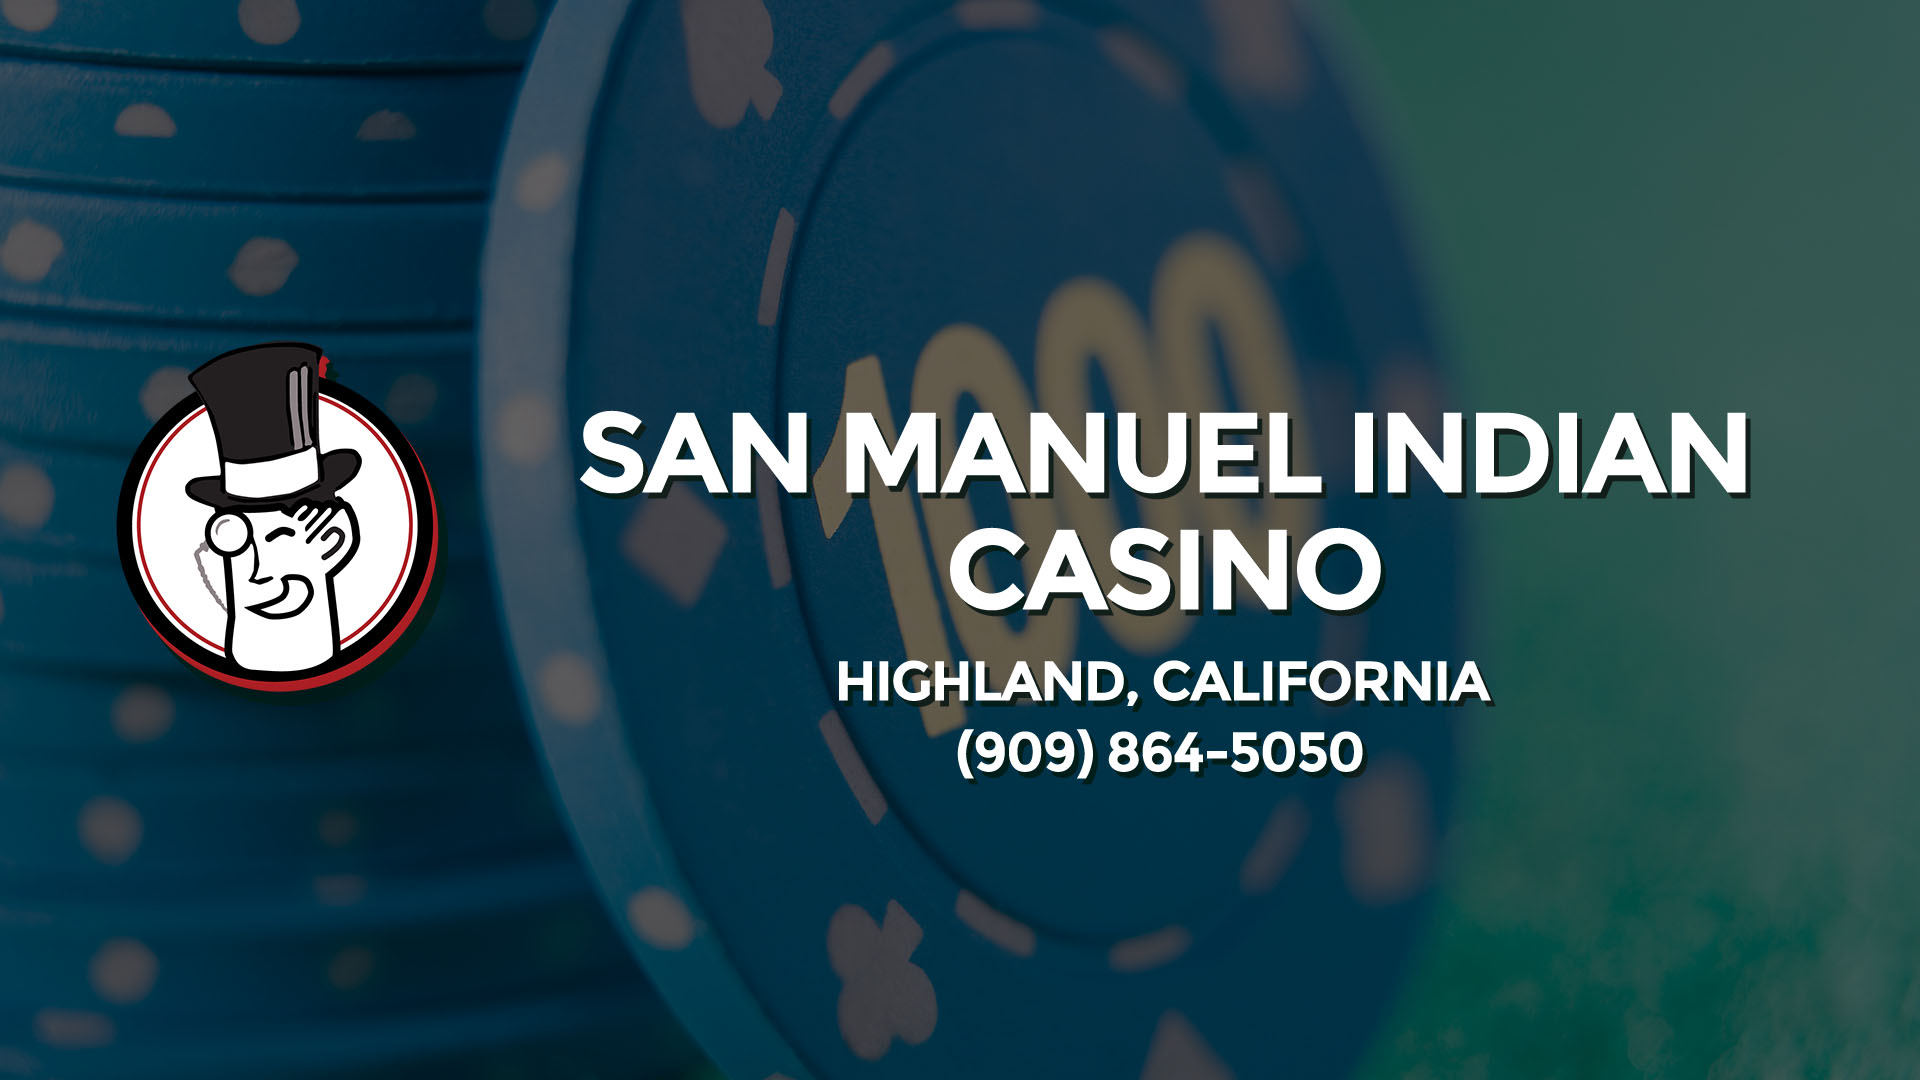 san manuel casino job fair in highland